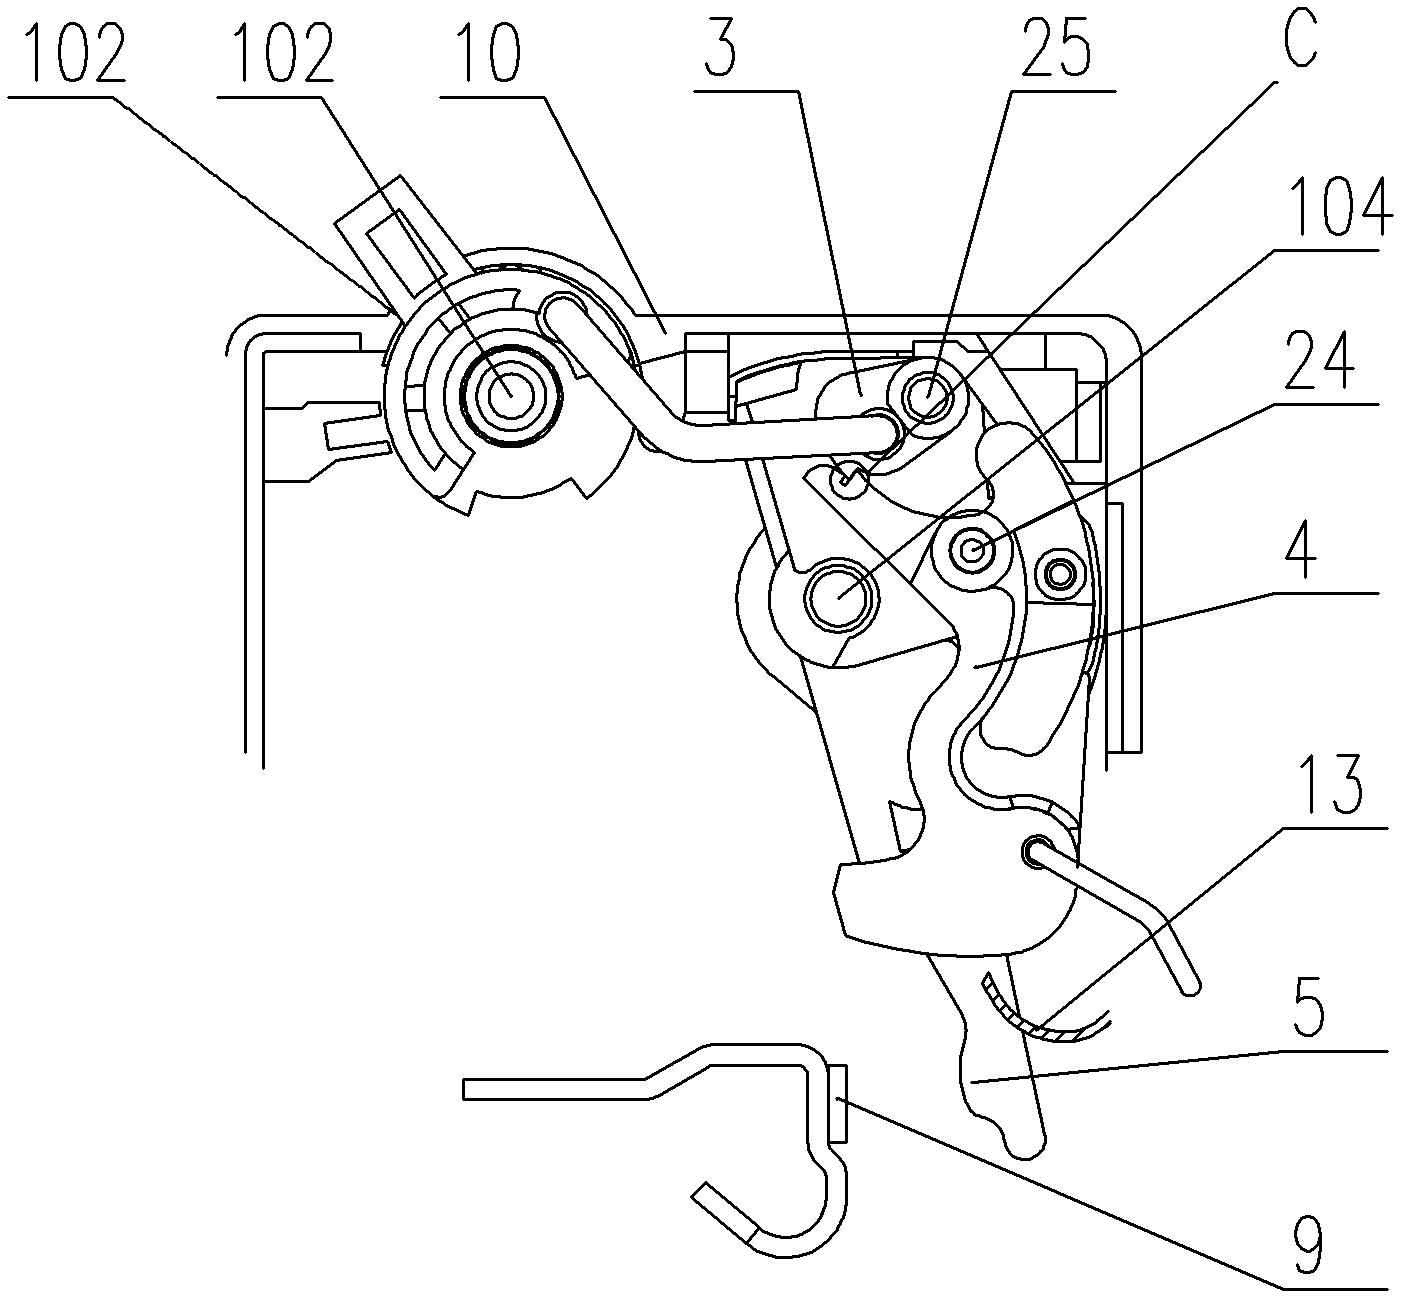 Operating mechanism of modularized breaker